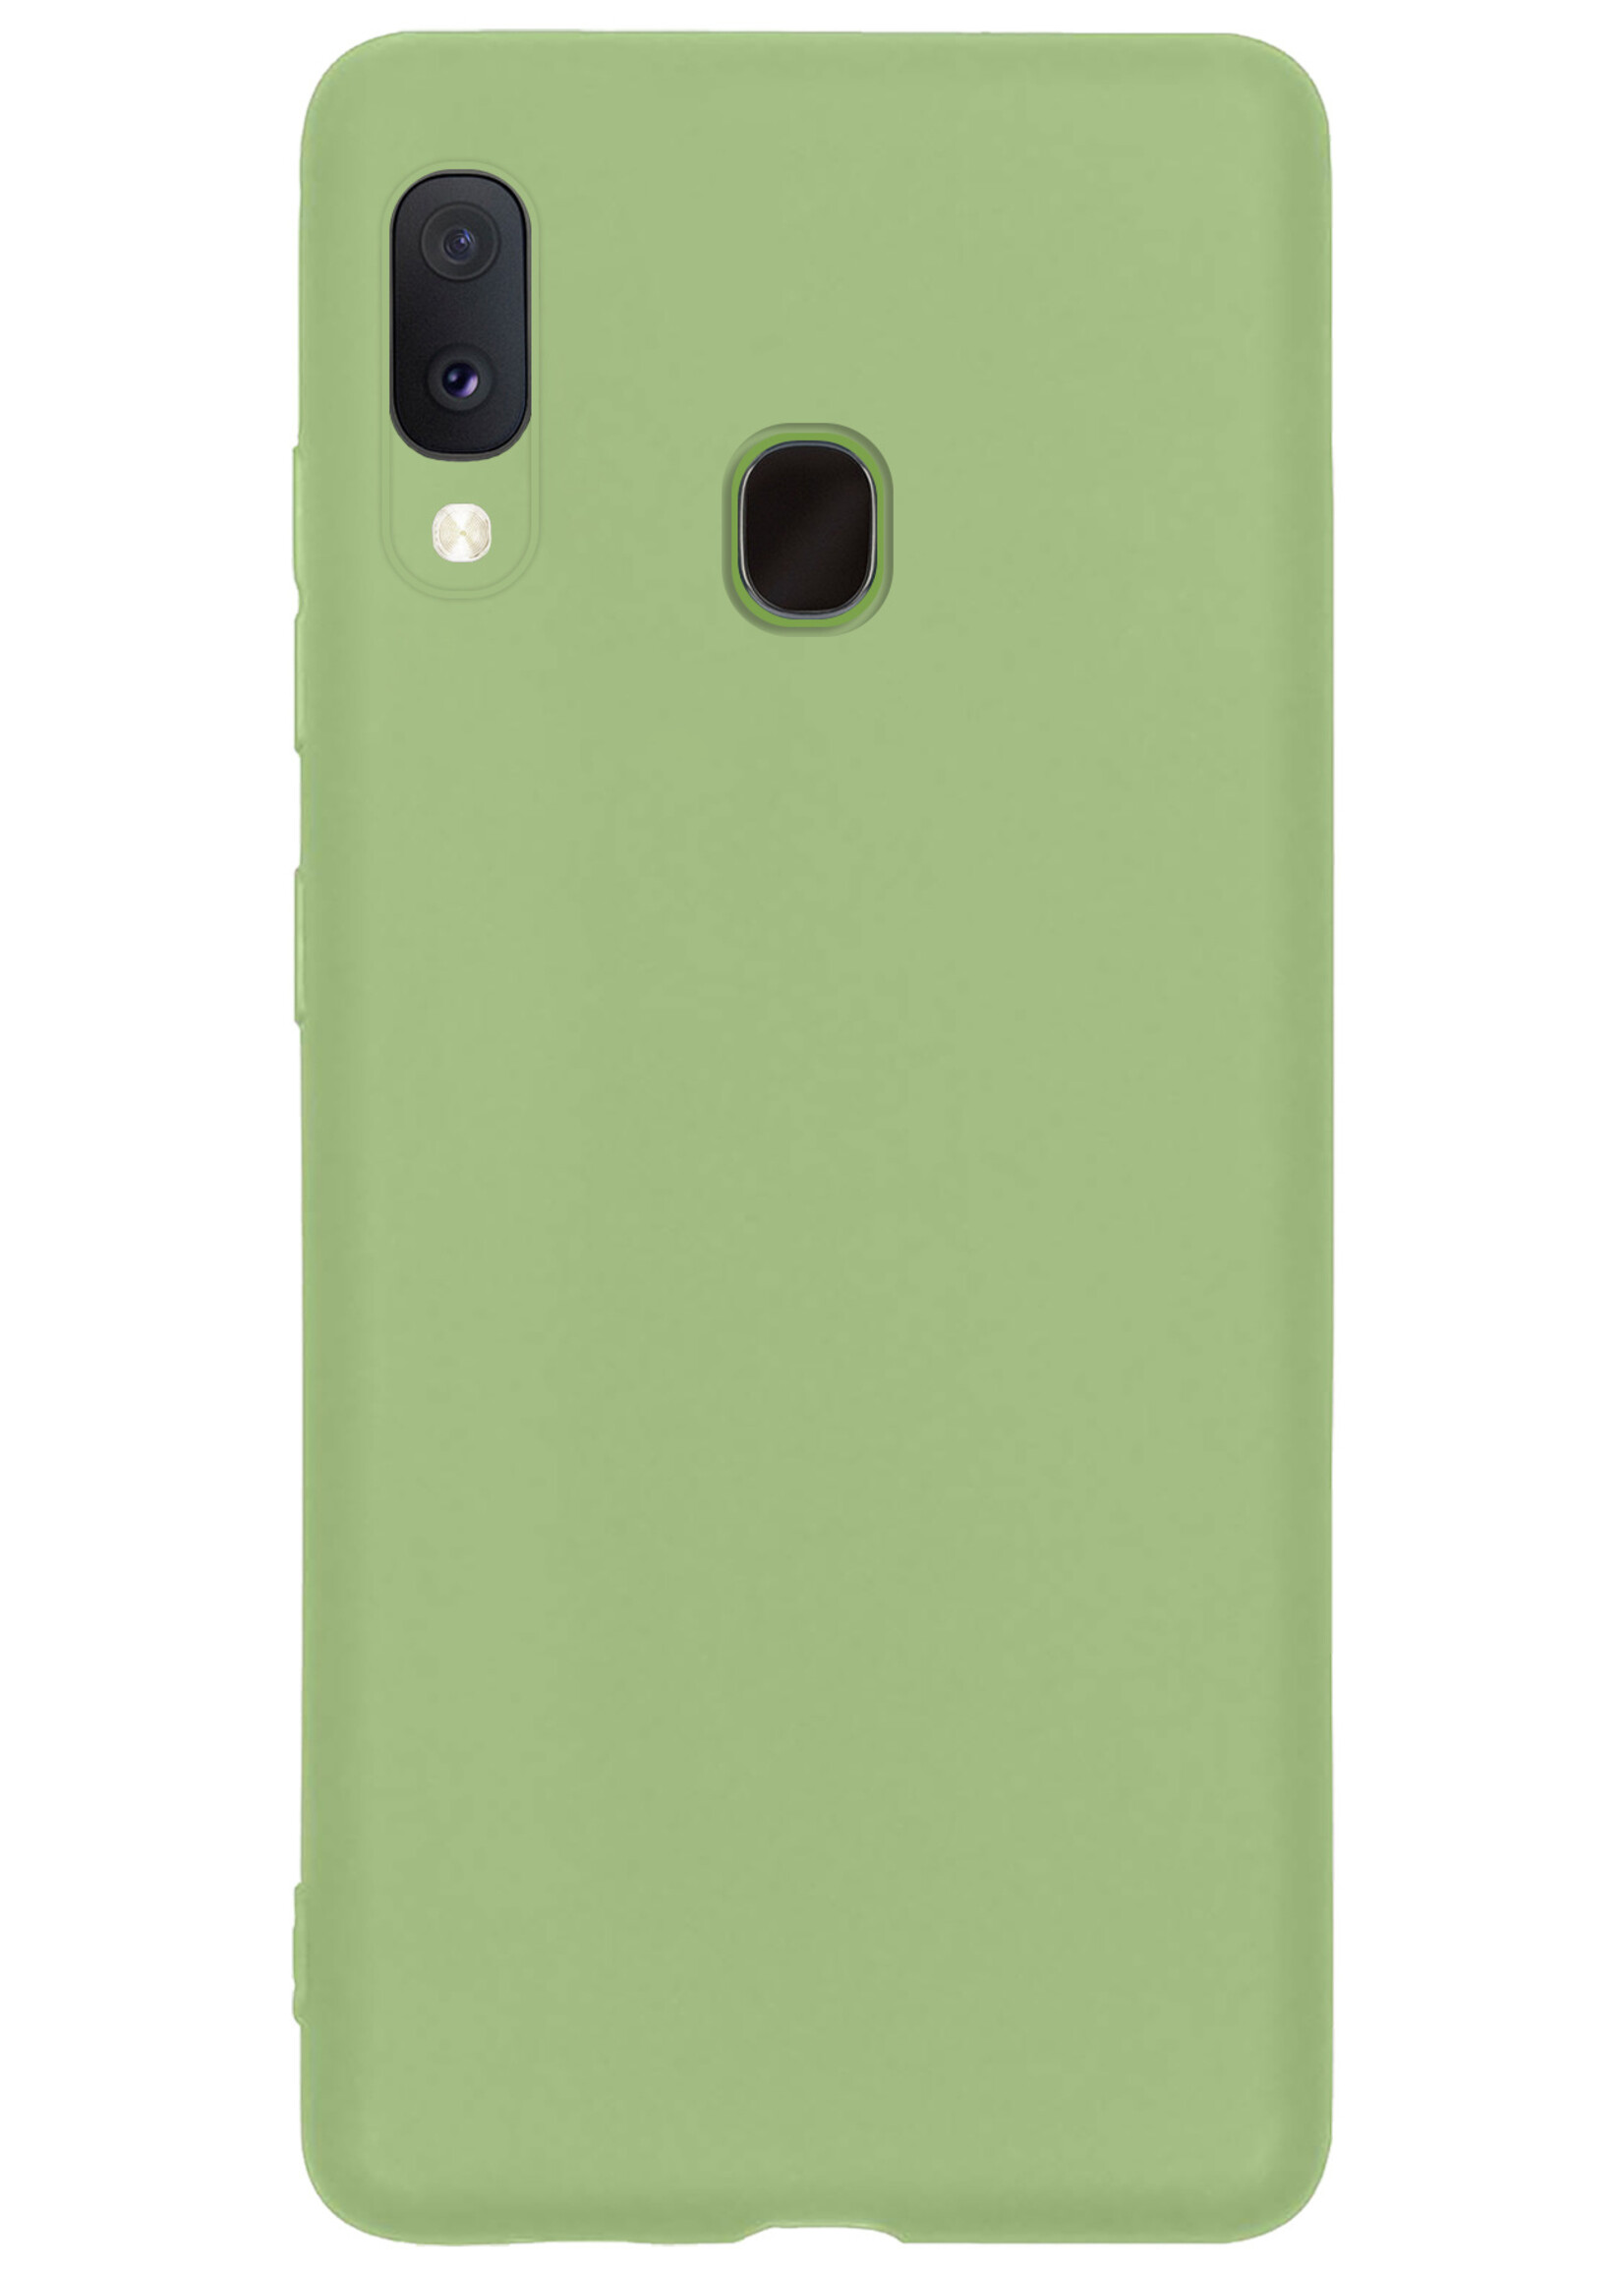 BTH Hoesje Geschikt voor Samsung A20e Hoesje Siliconen Case Hoes - Hoes Geschikt voor Samsung Galaxy A20e Hoes Cover Case - Groen - 2 PACK